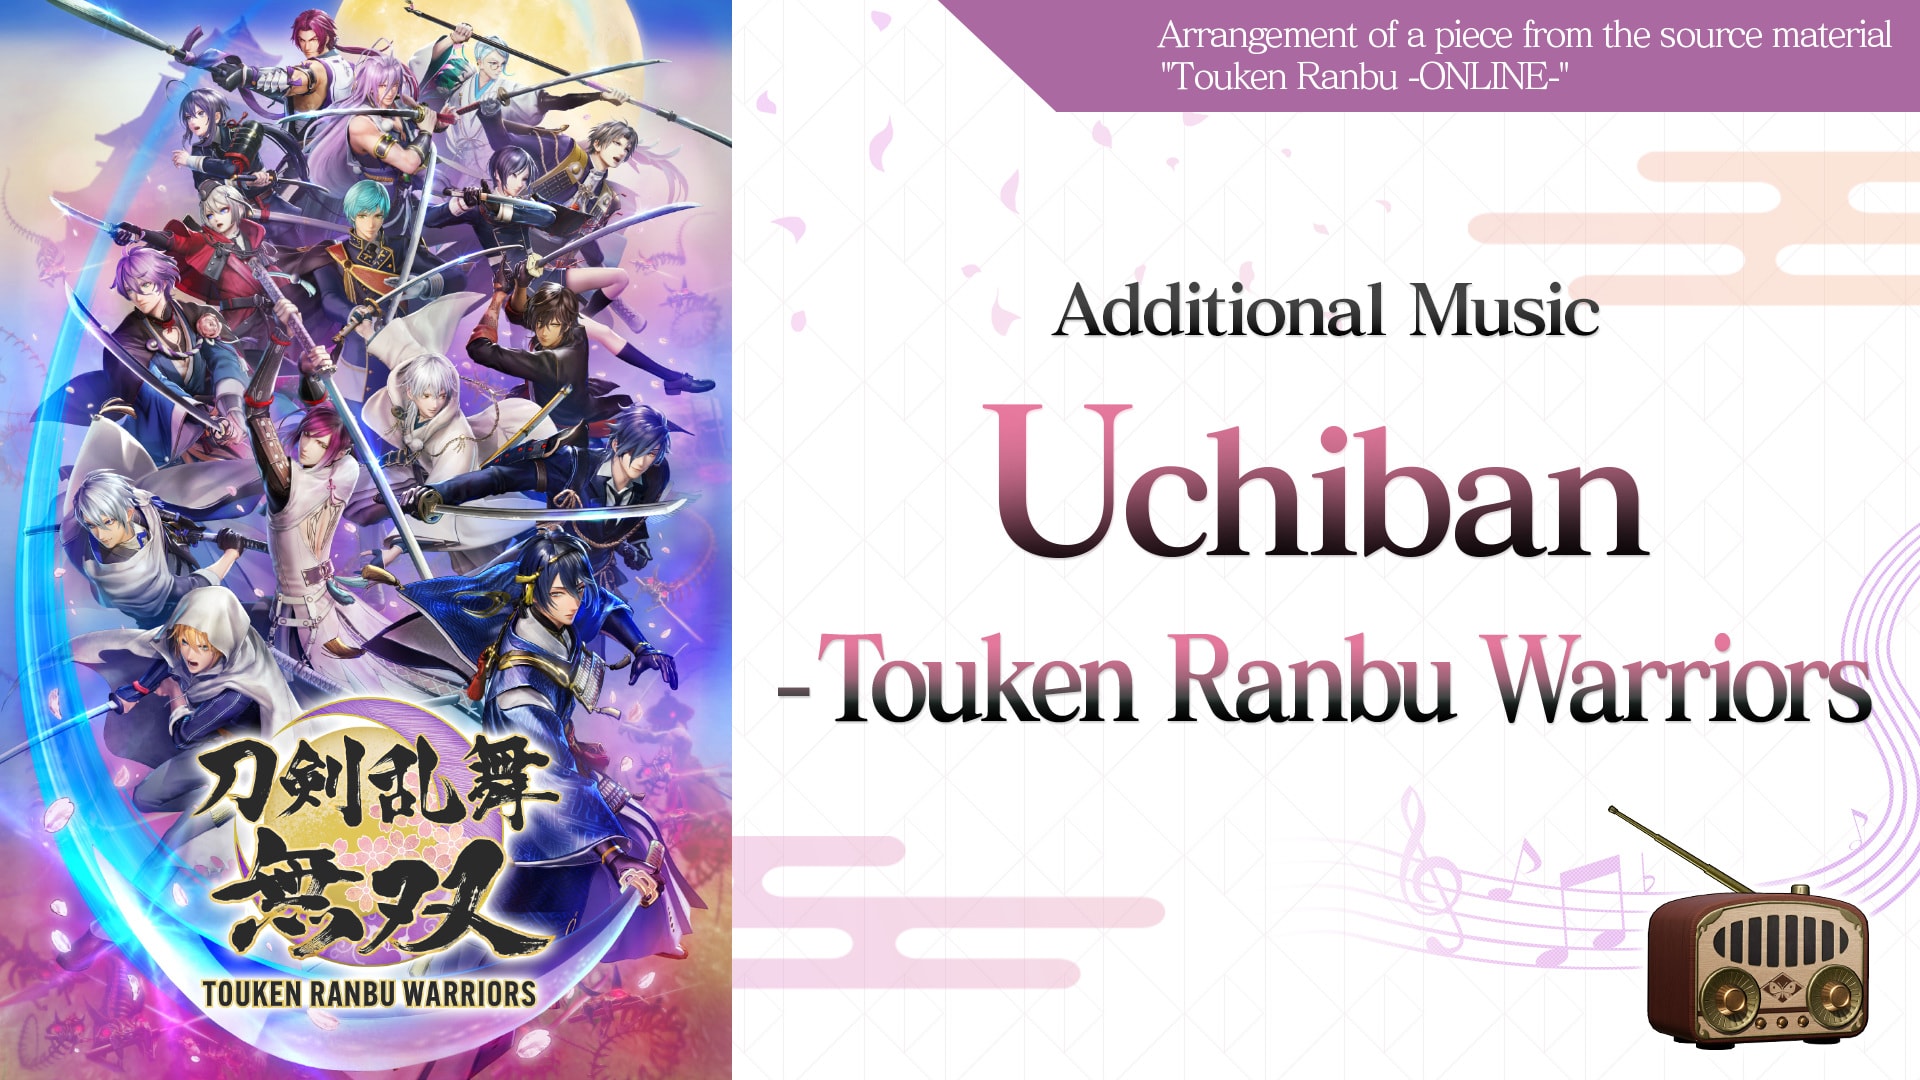 Additional Music "Uchiban - Touken Ranbu Warriors"